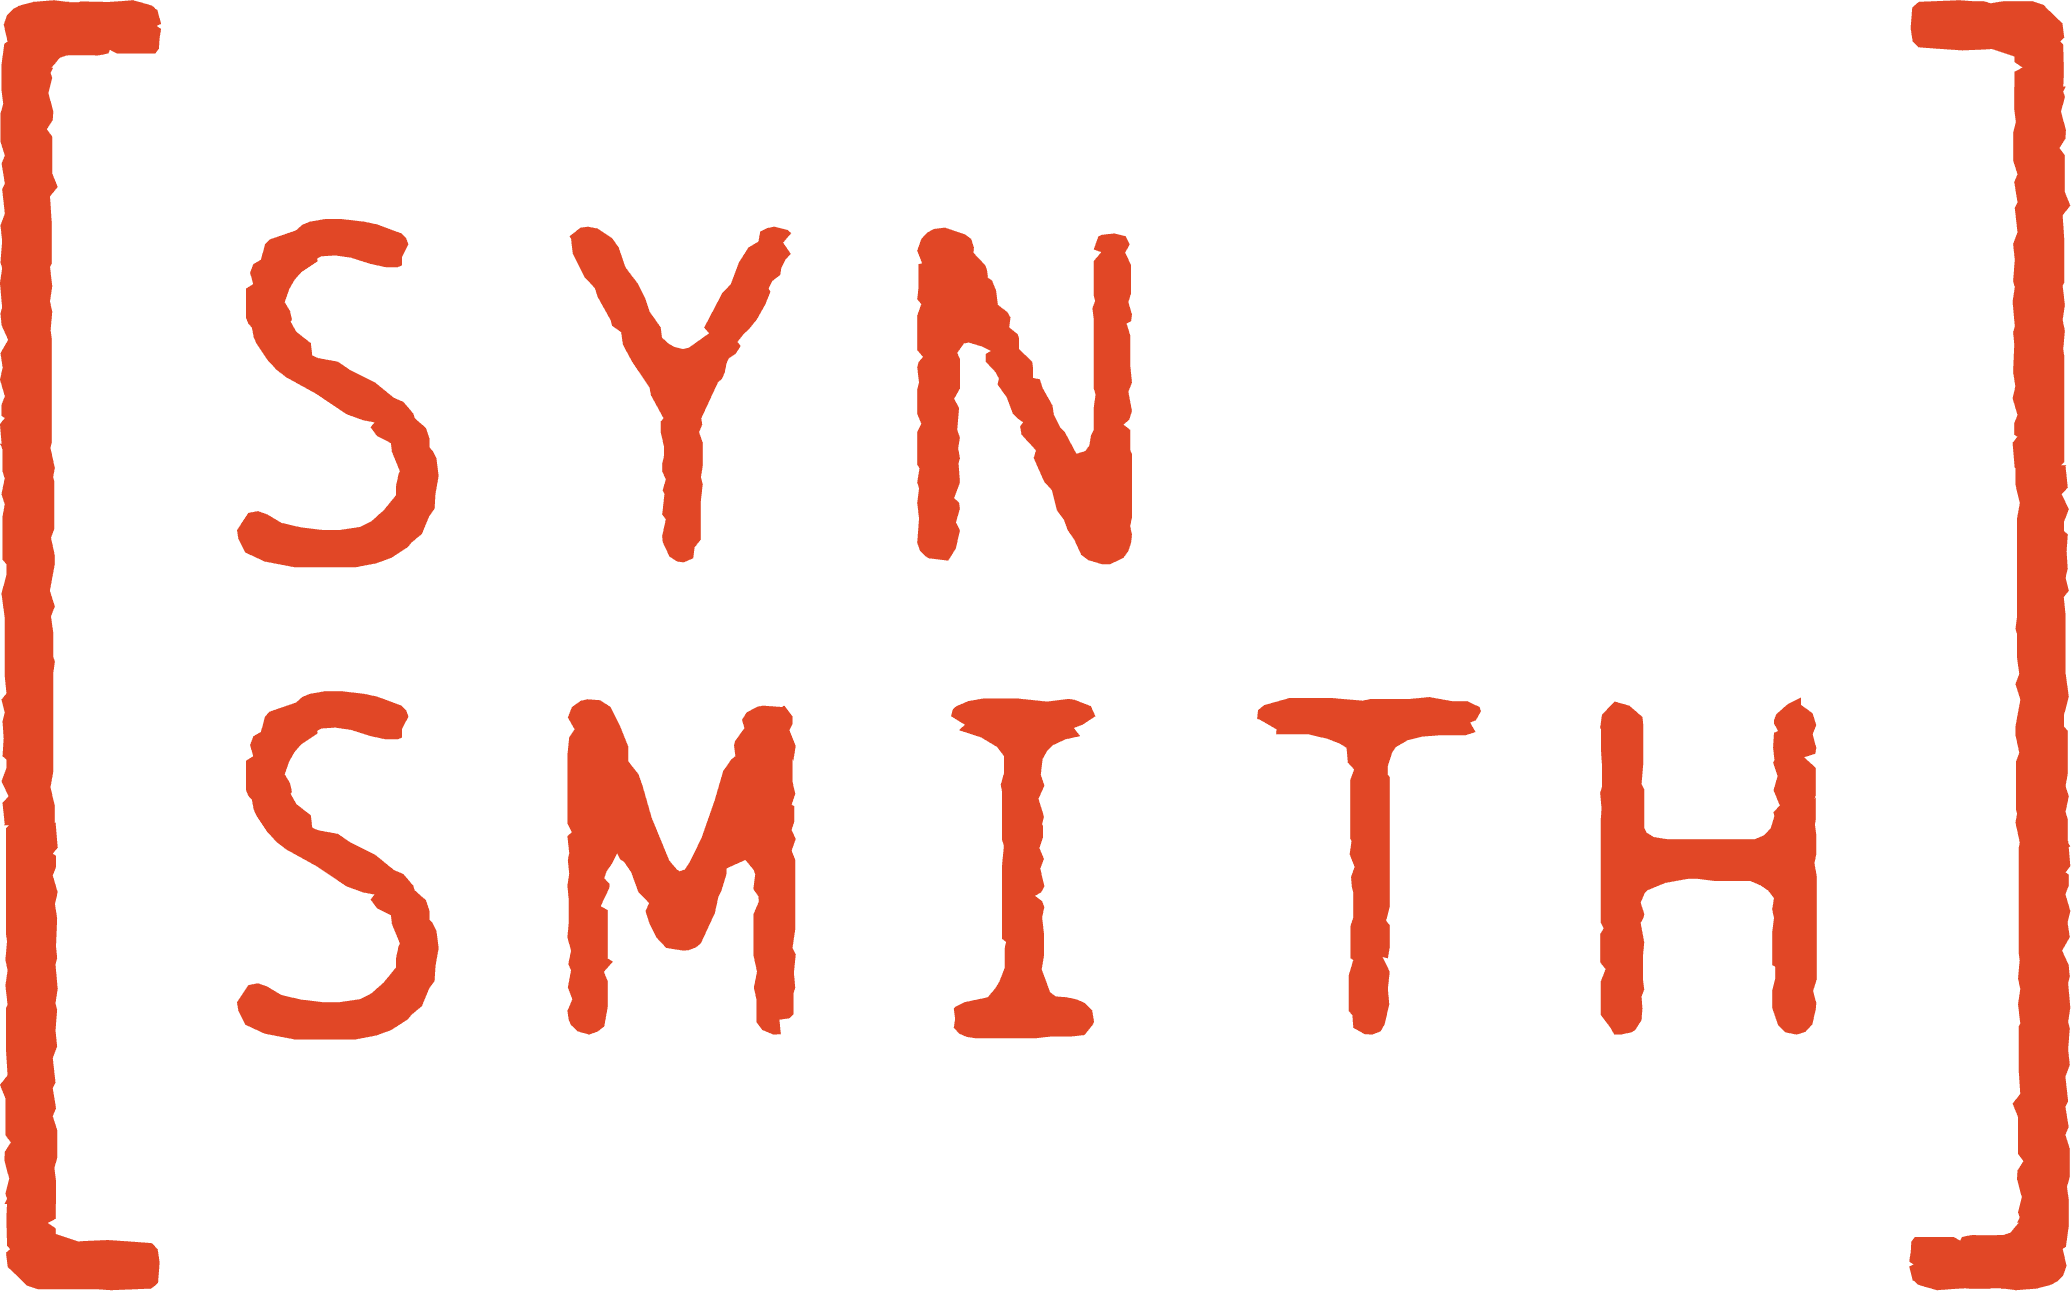 Syndicate Smith